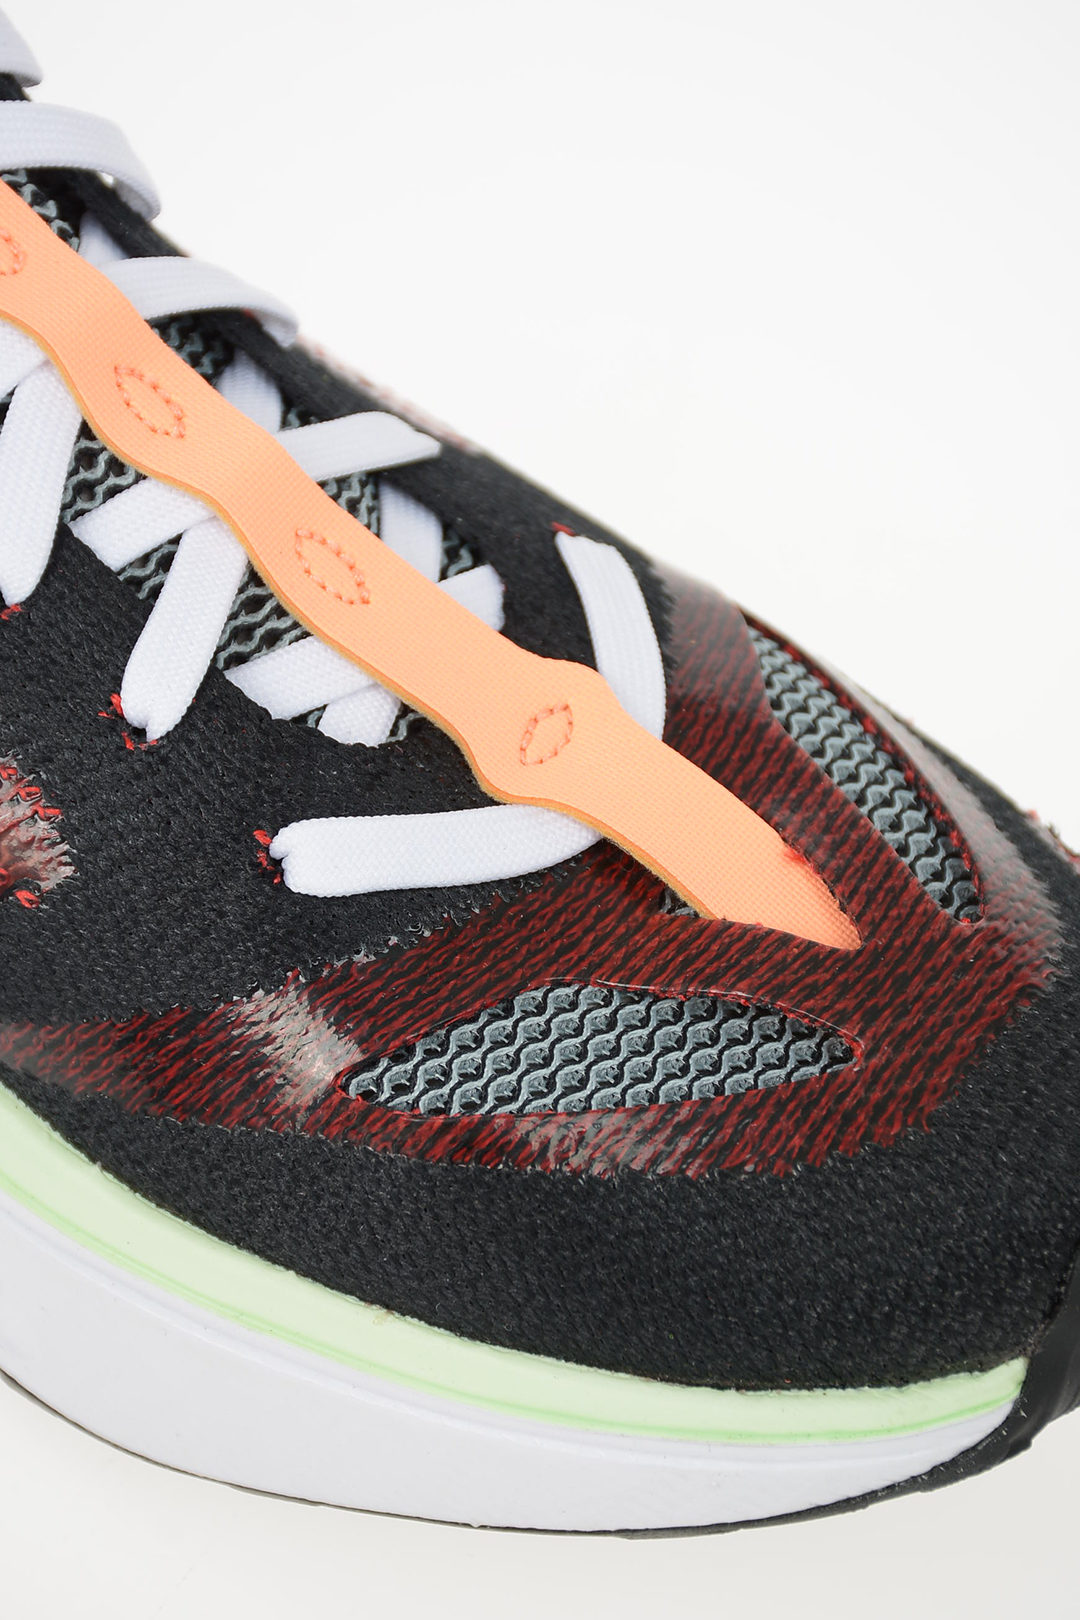 Levering Communicatie netwerk Smerig Nike Fabric N110 D/MS/X Sneakers men - Glamood Outlet